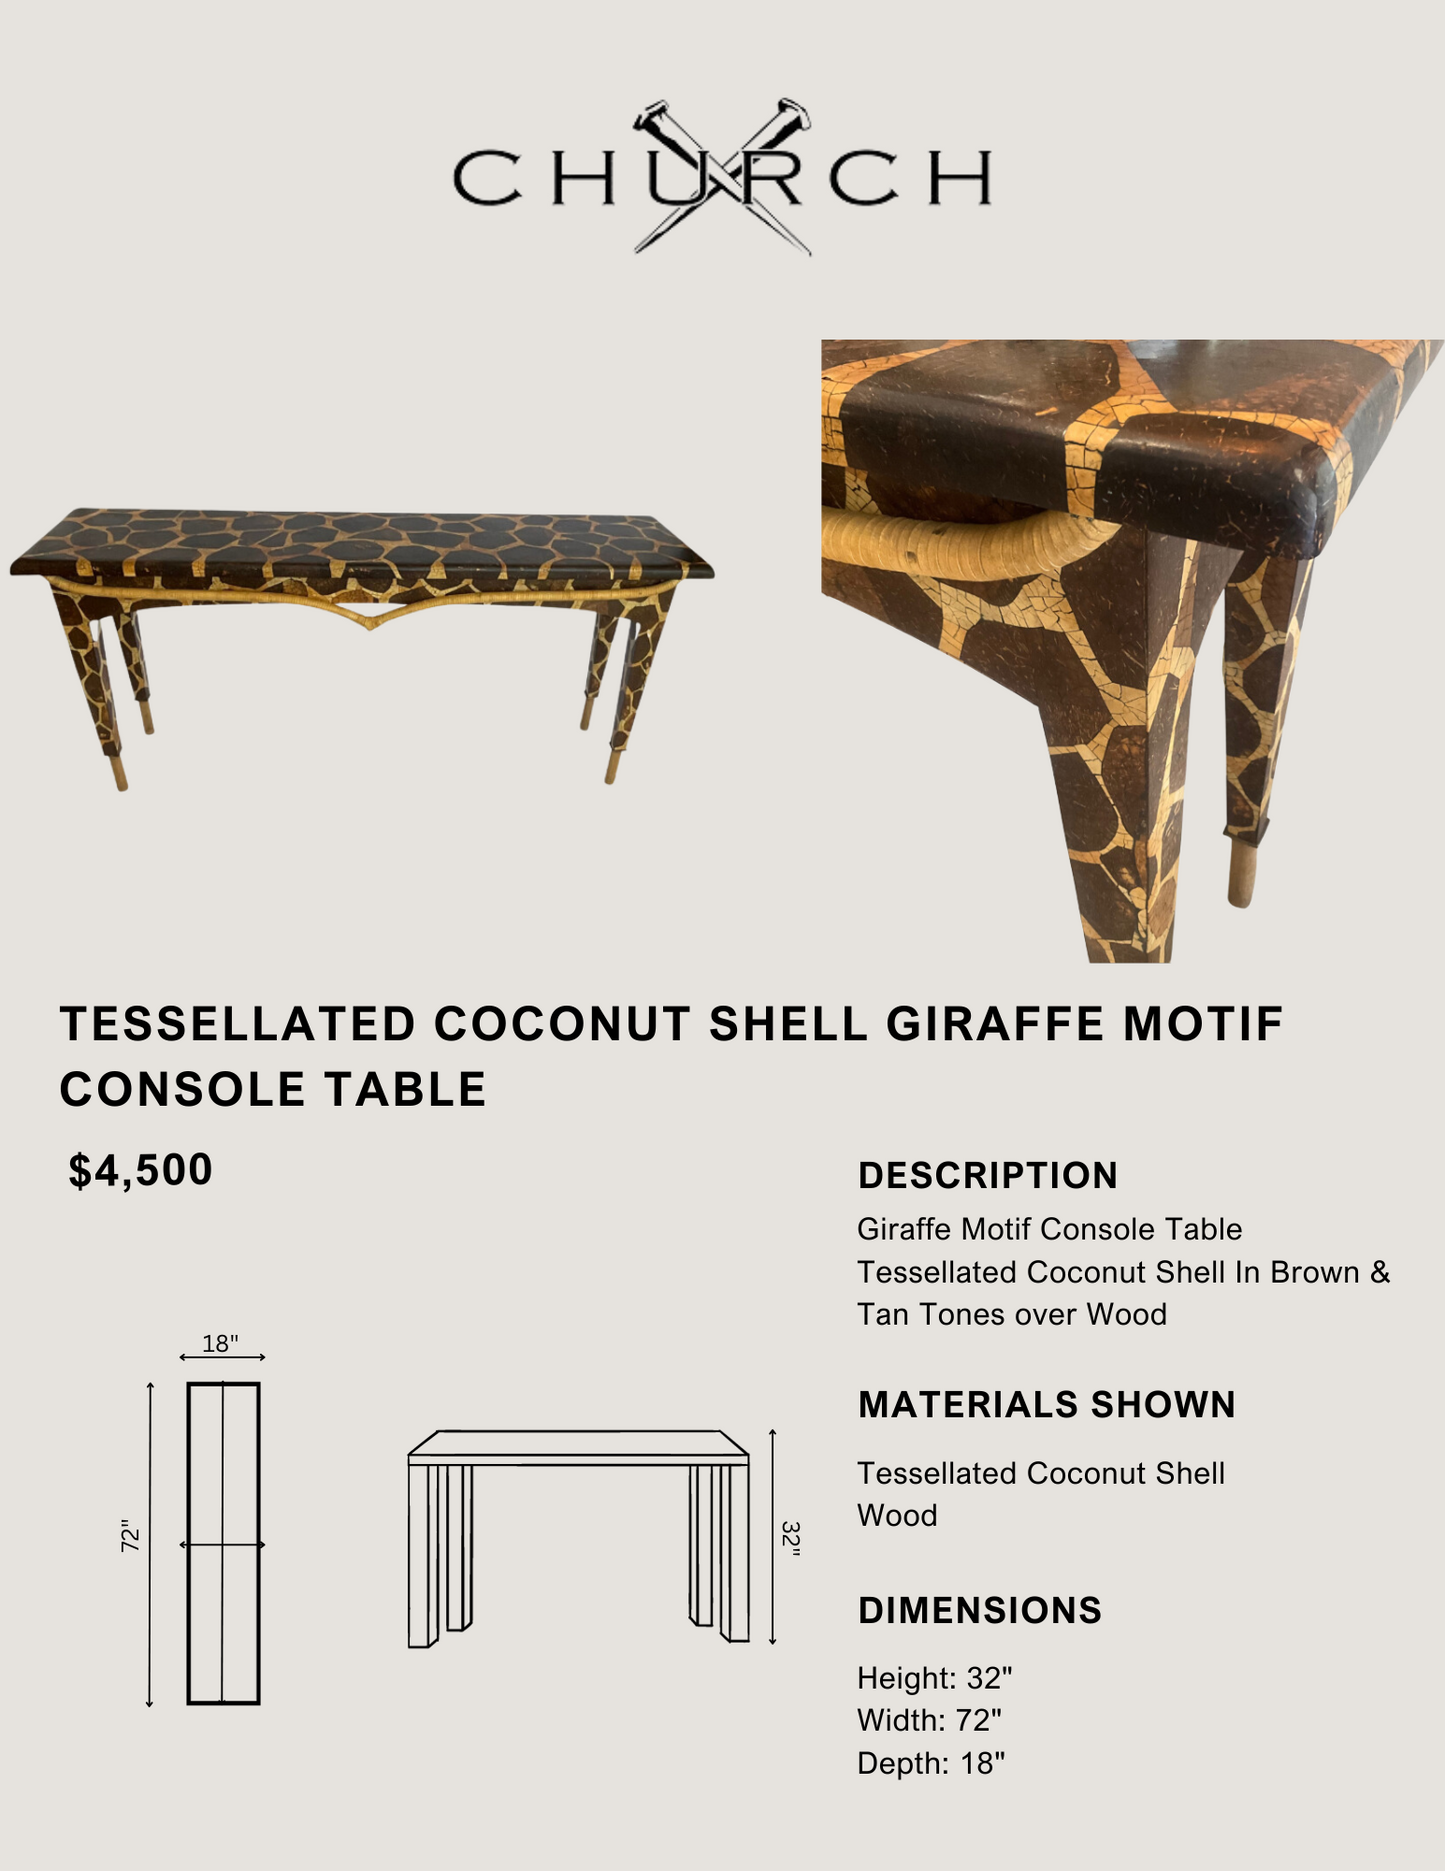 Tessellated Coconut Shell Giraffe Motif Console Table